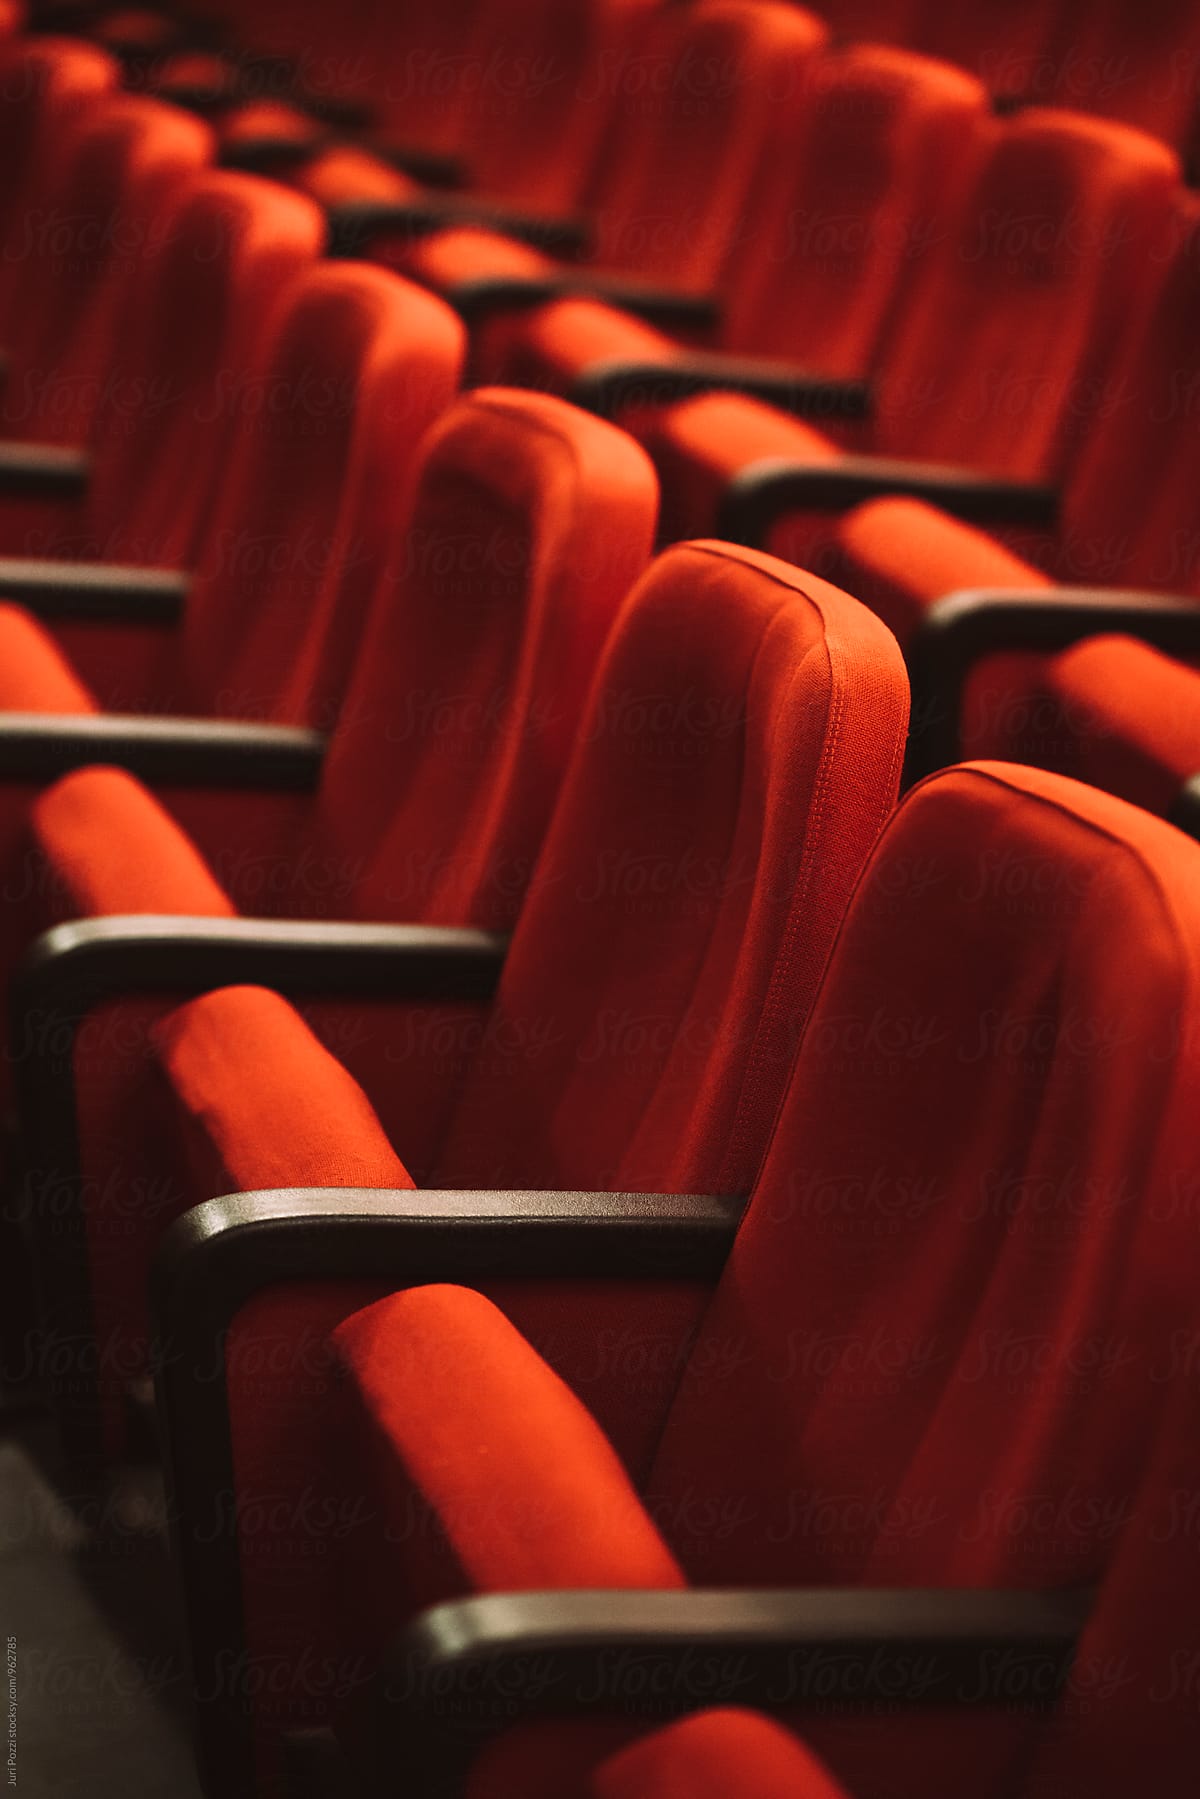 red cinema or theatre empty seats